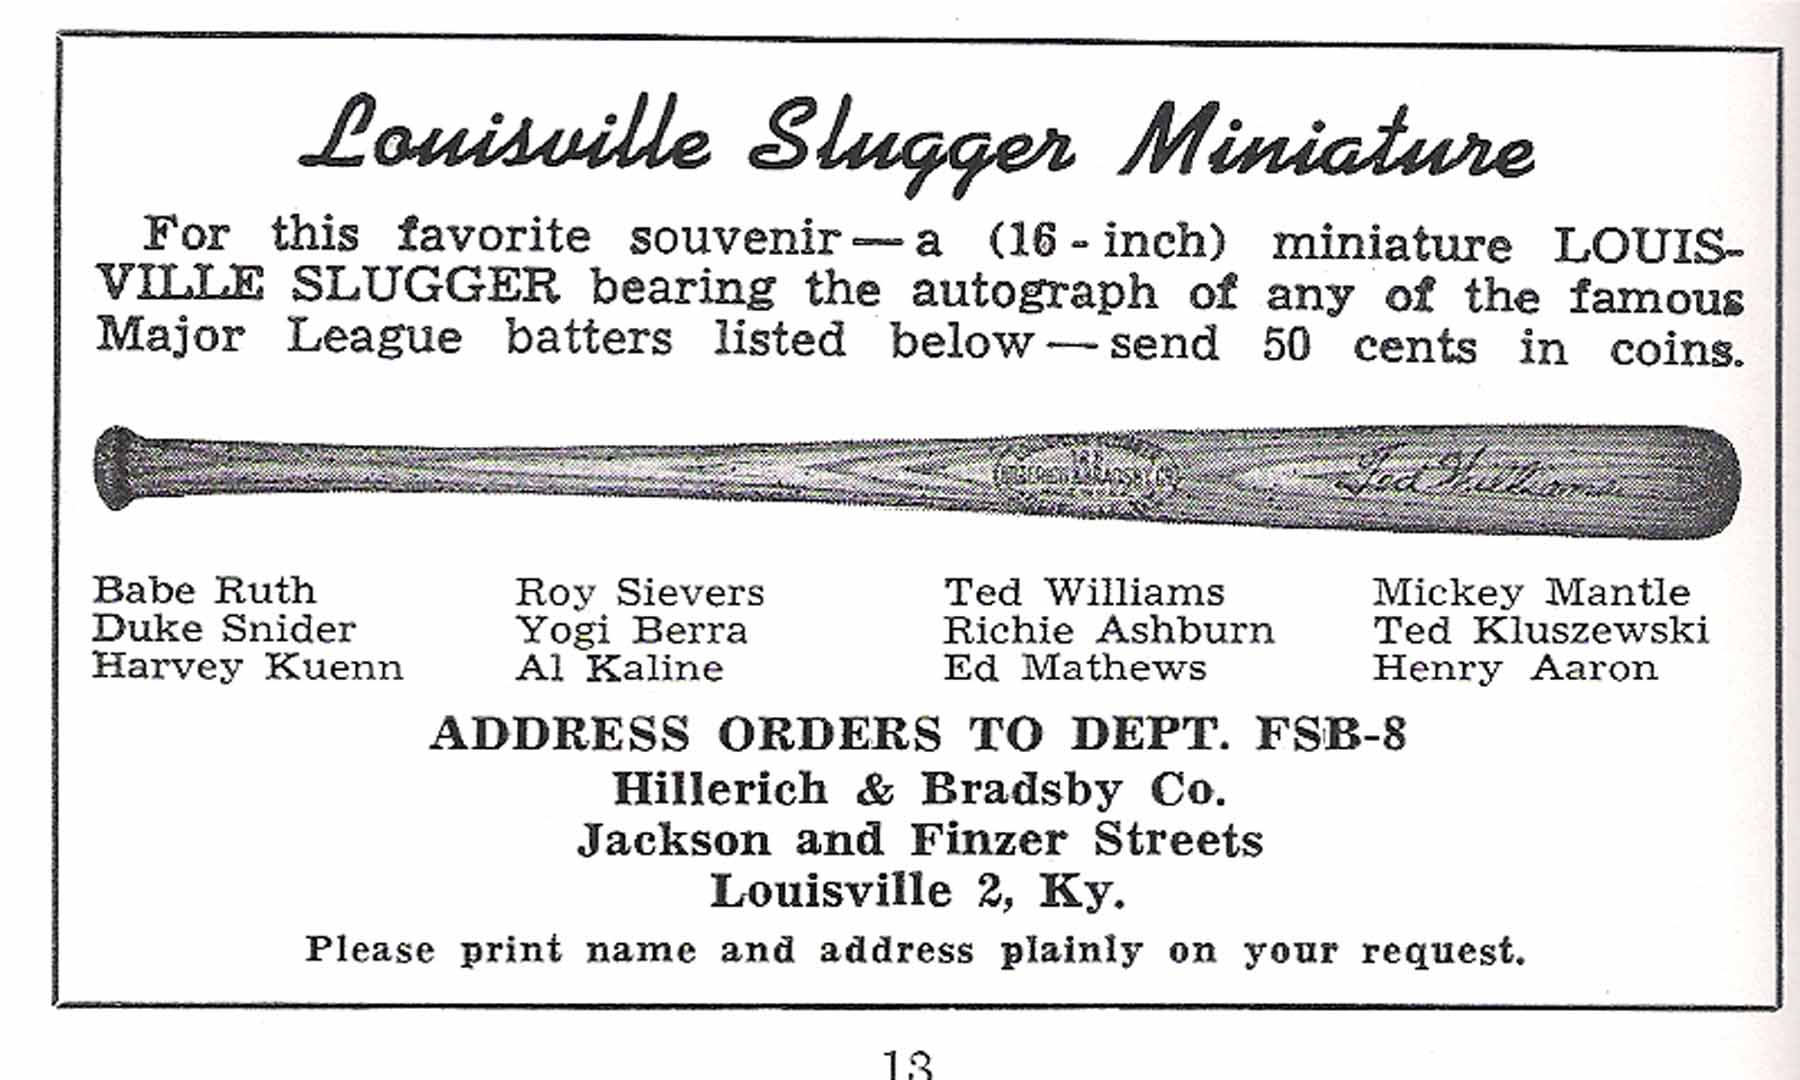 1958 louisville famous sluggers